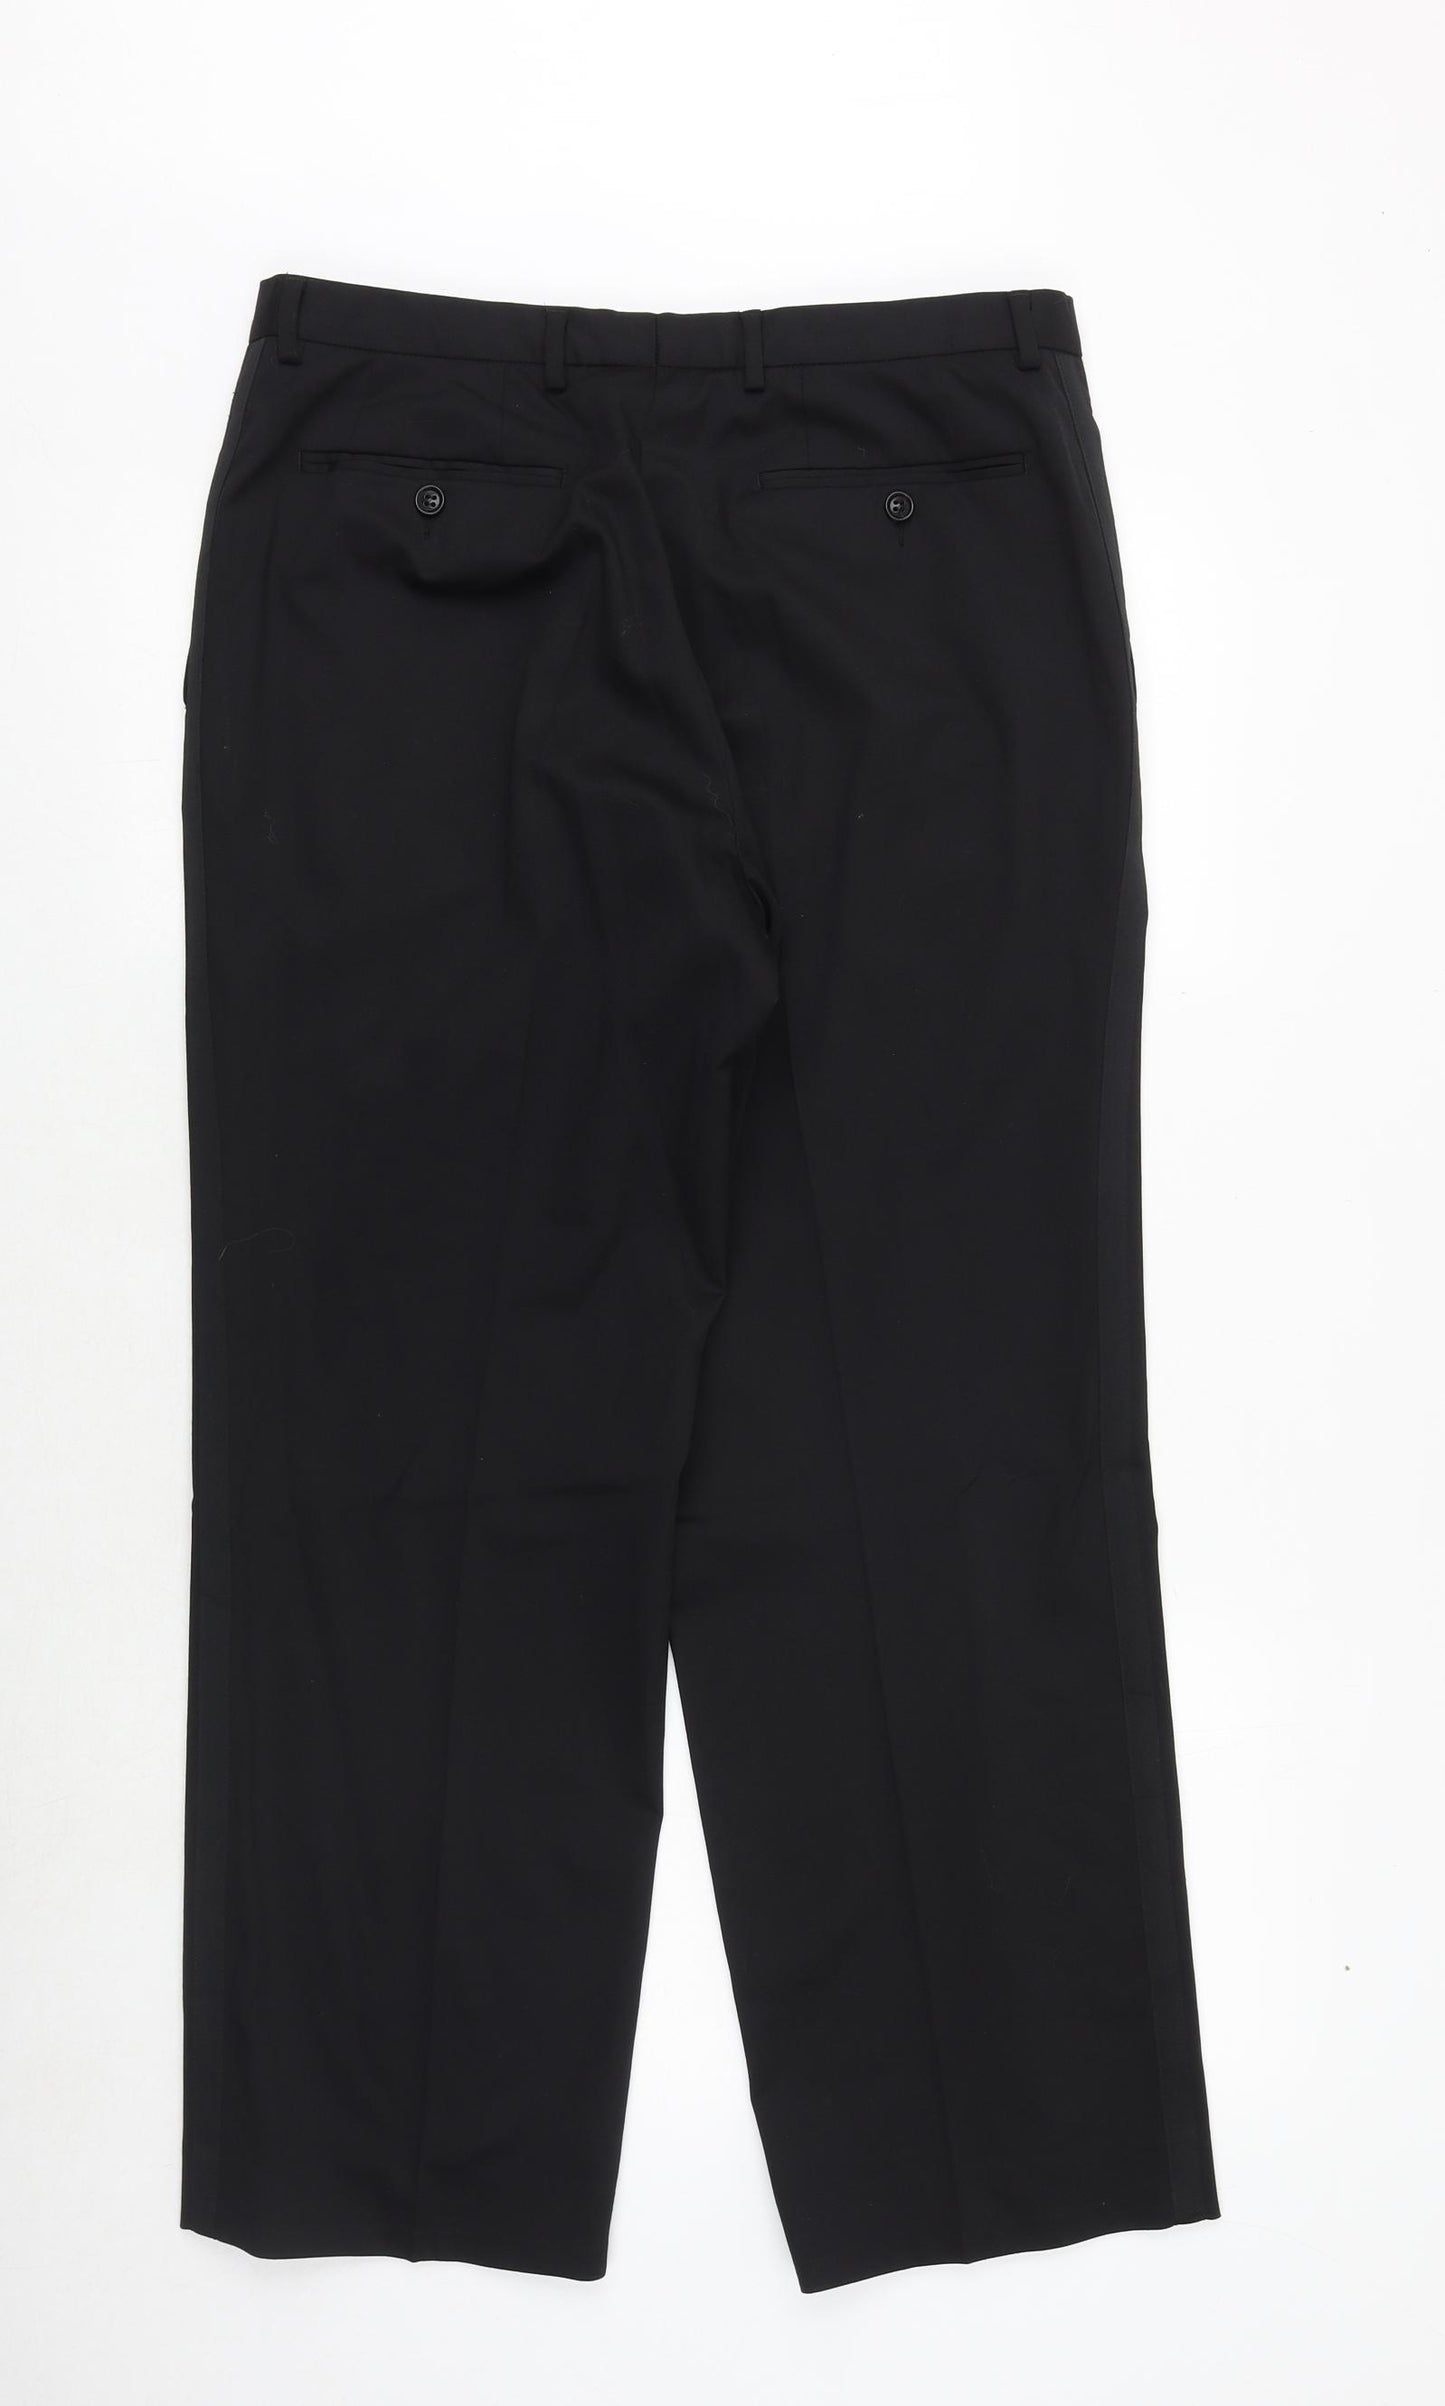 NEXT Mens Black Polyester Dress Pants Trousers Size 34 in Regular Zip